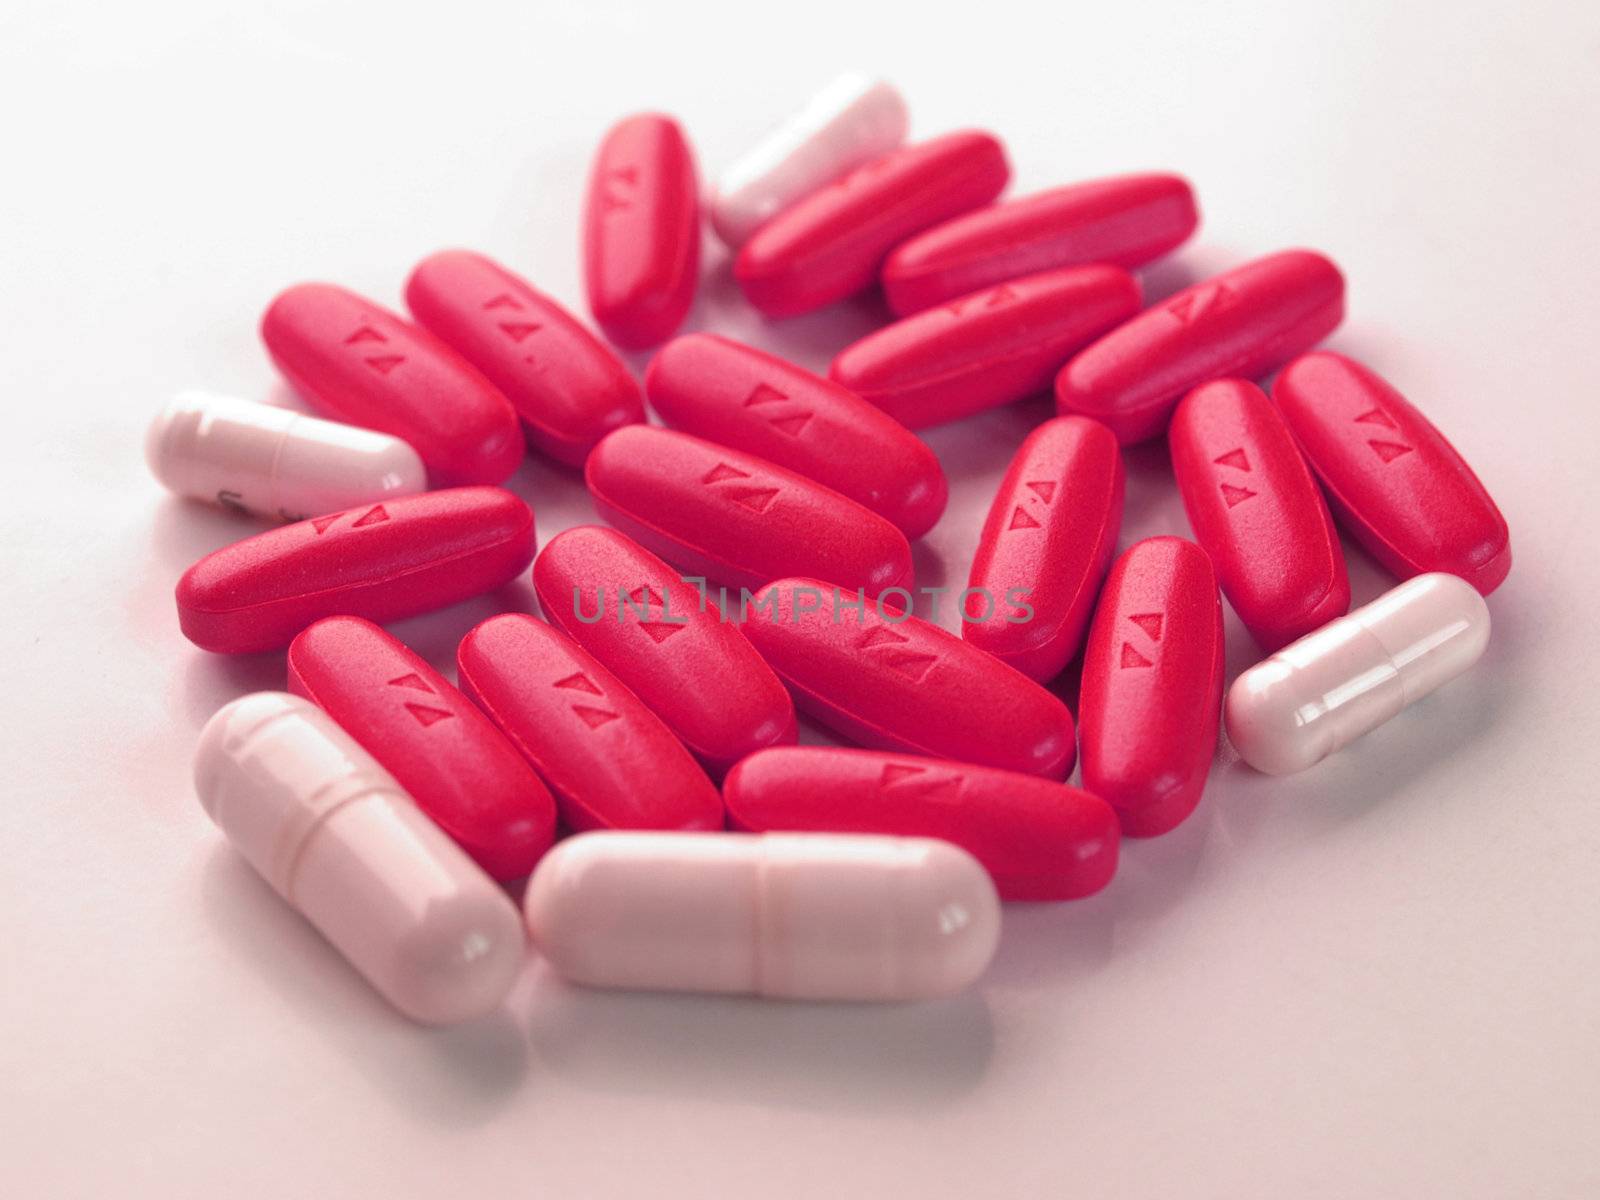 Pills by claudiodivizia